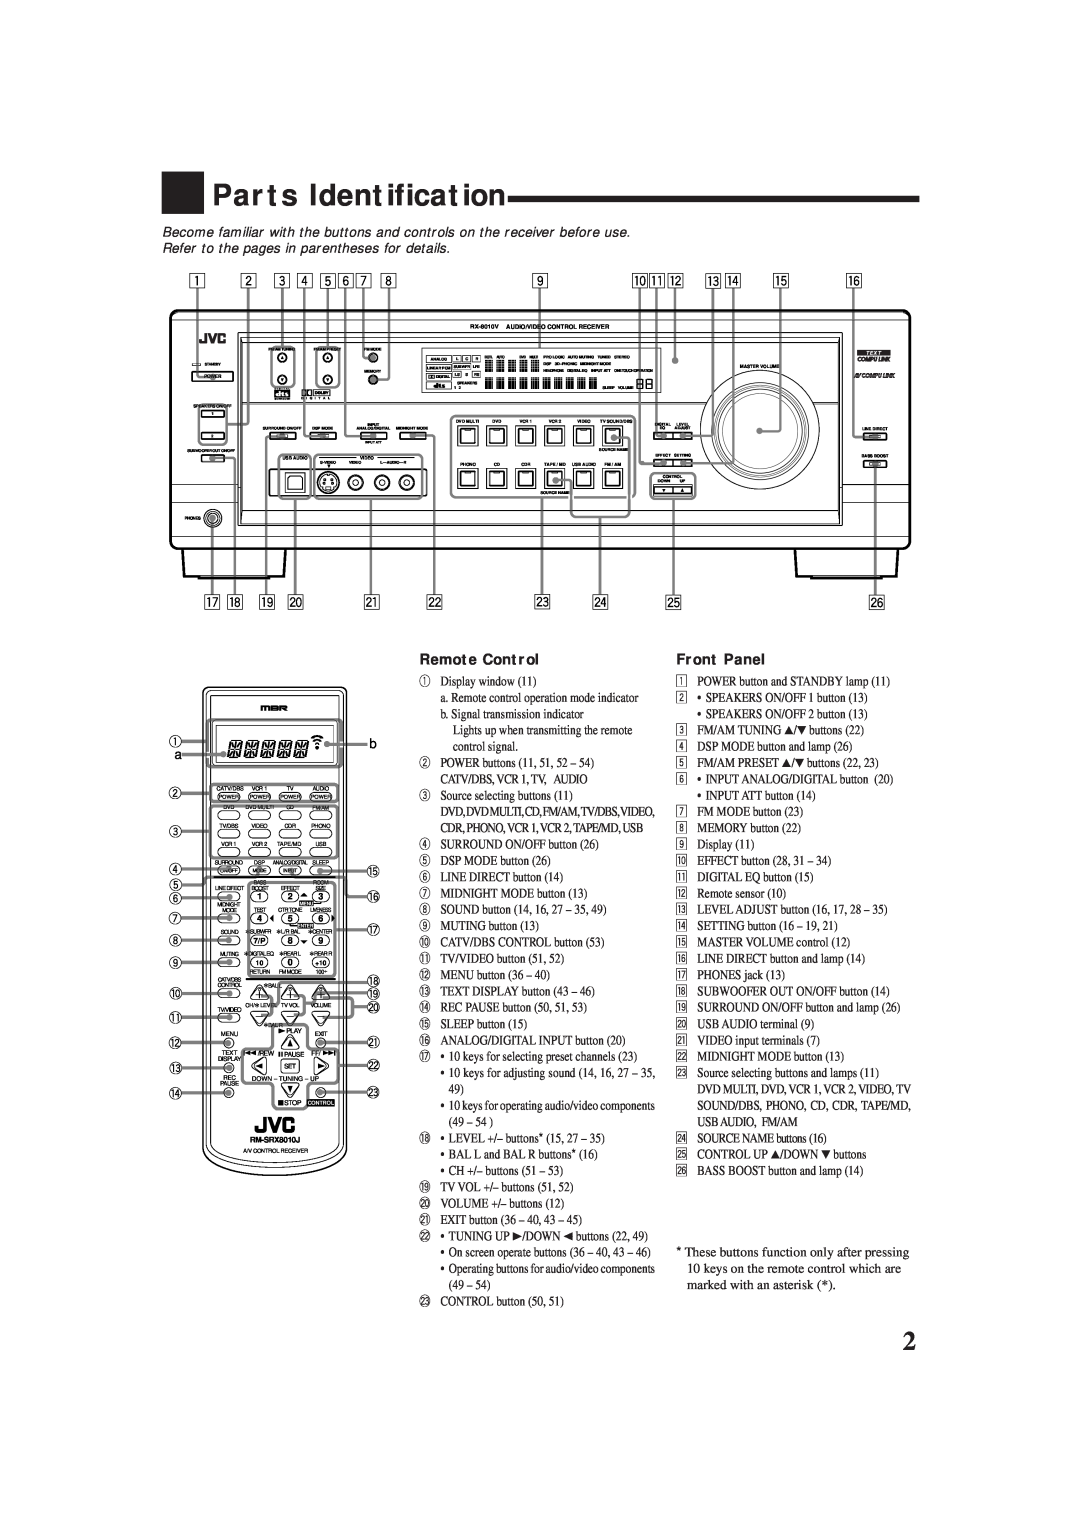 JVC rx-8010vbk manual Parts Identification, pqw e r t, u i o, Remote Control, Front Panel 